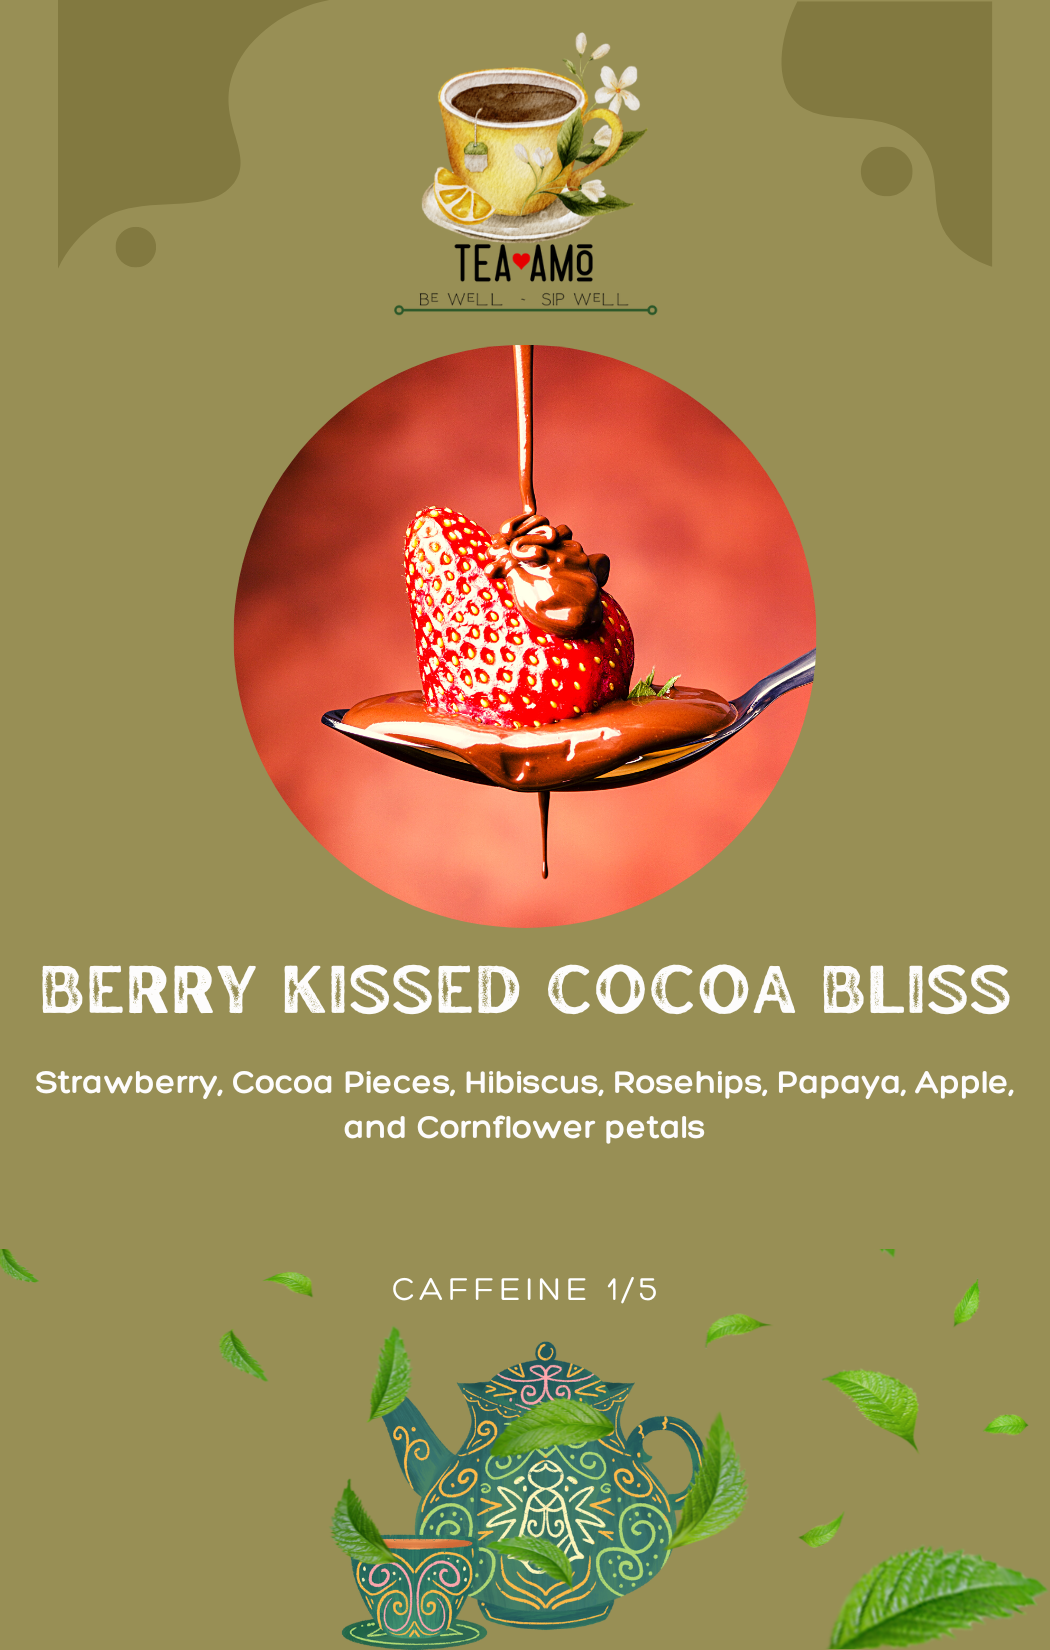 Tea Amo Wellness: Berry Kissed Cocoa Bliss